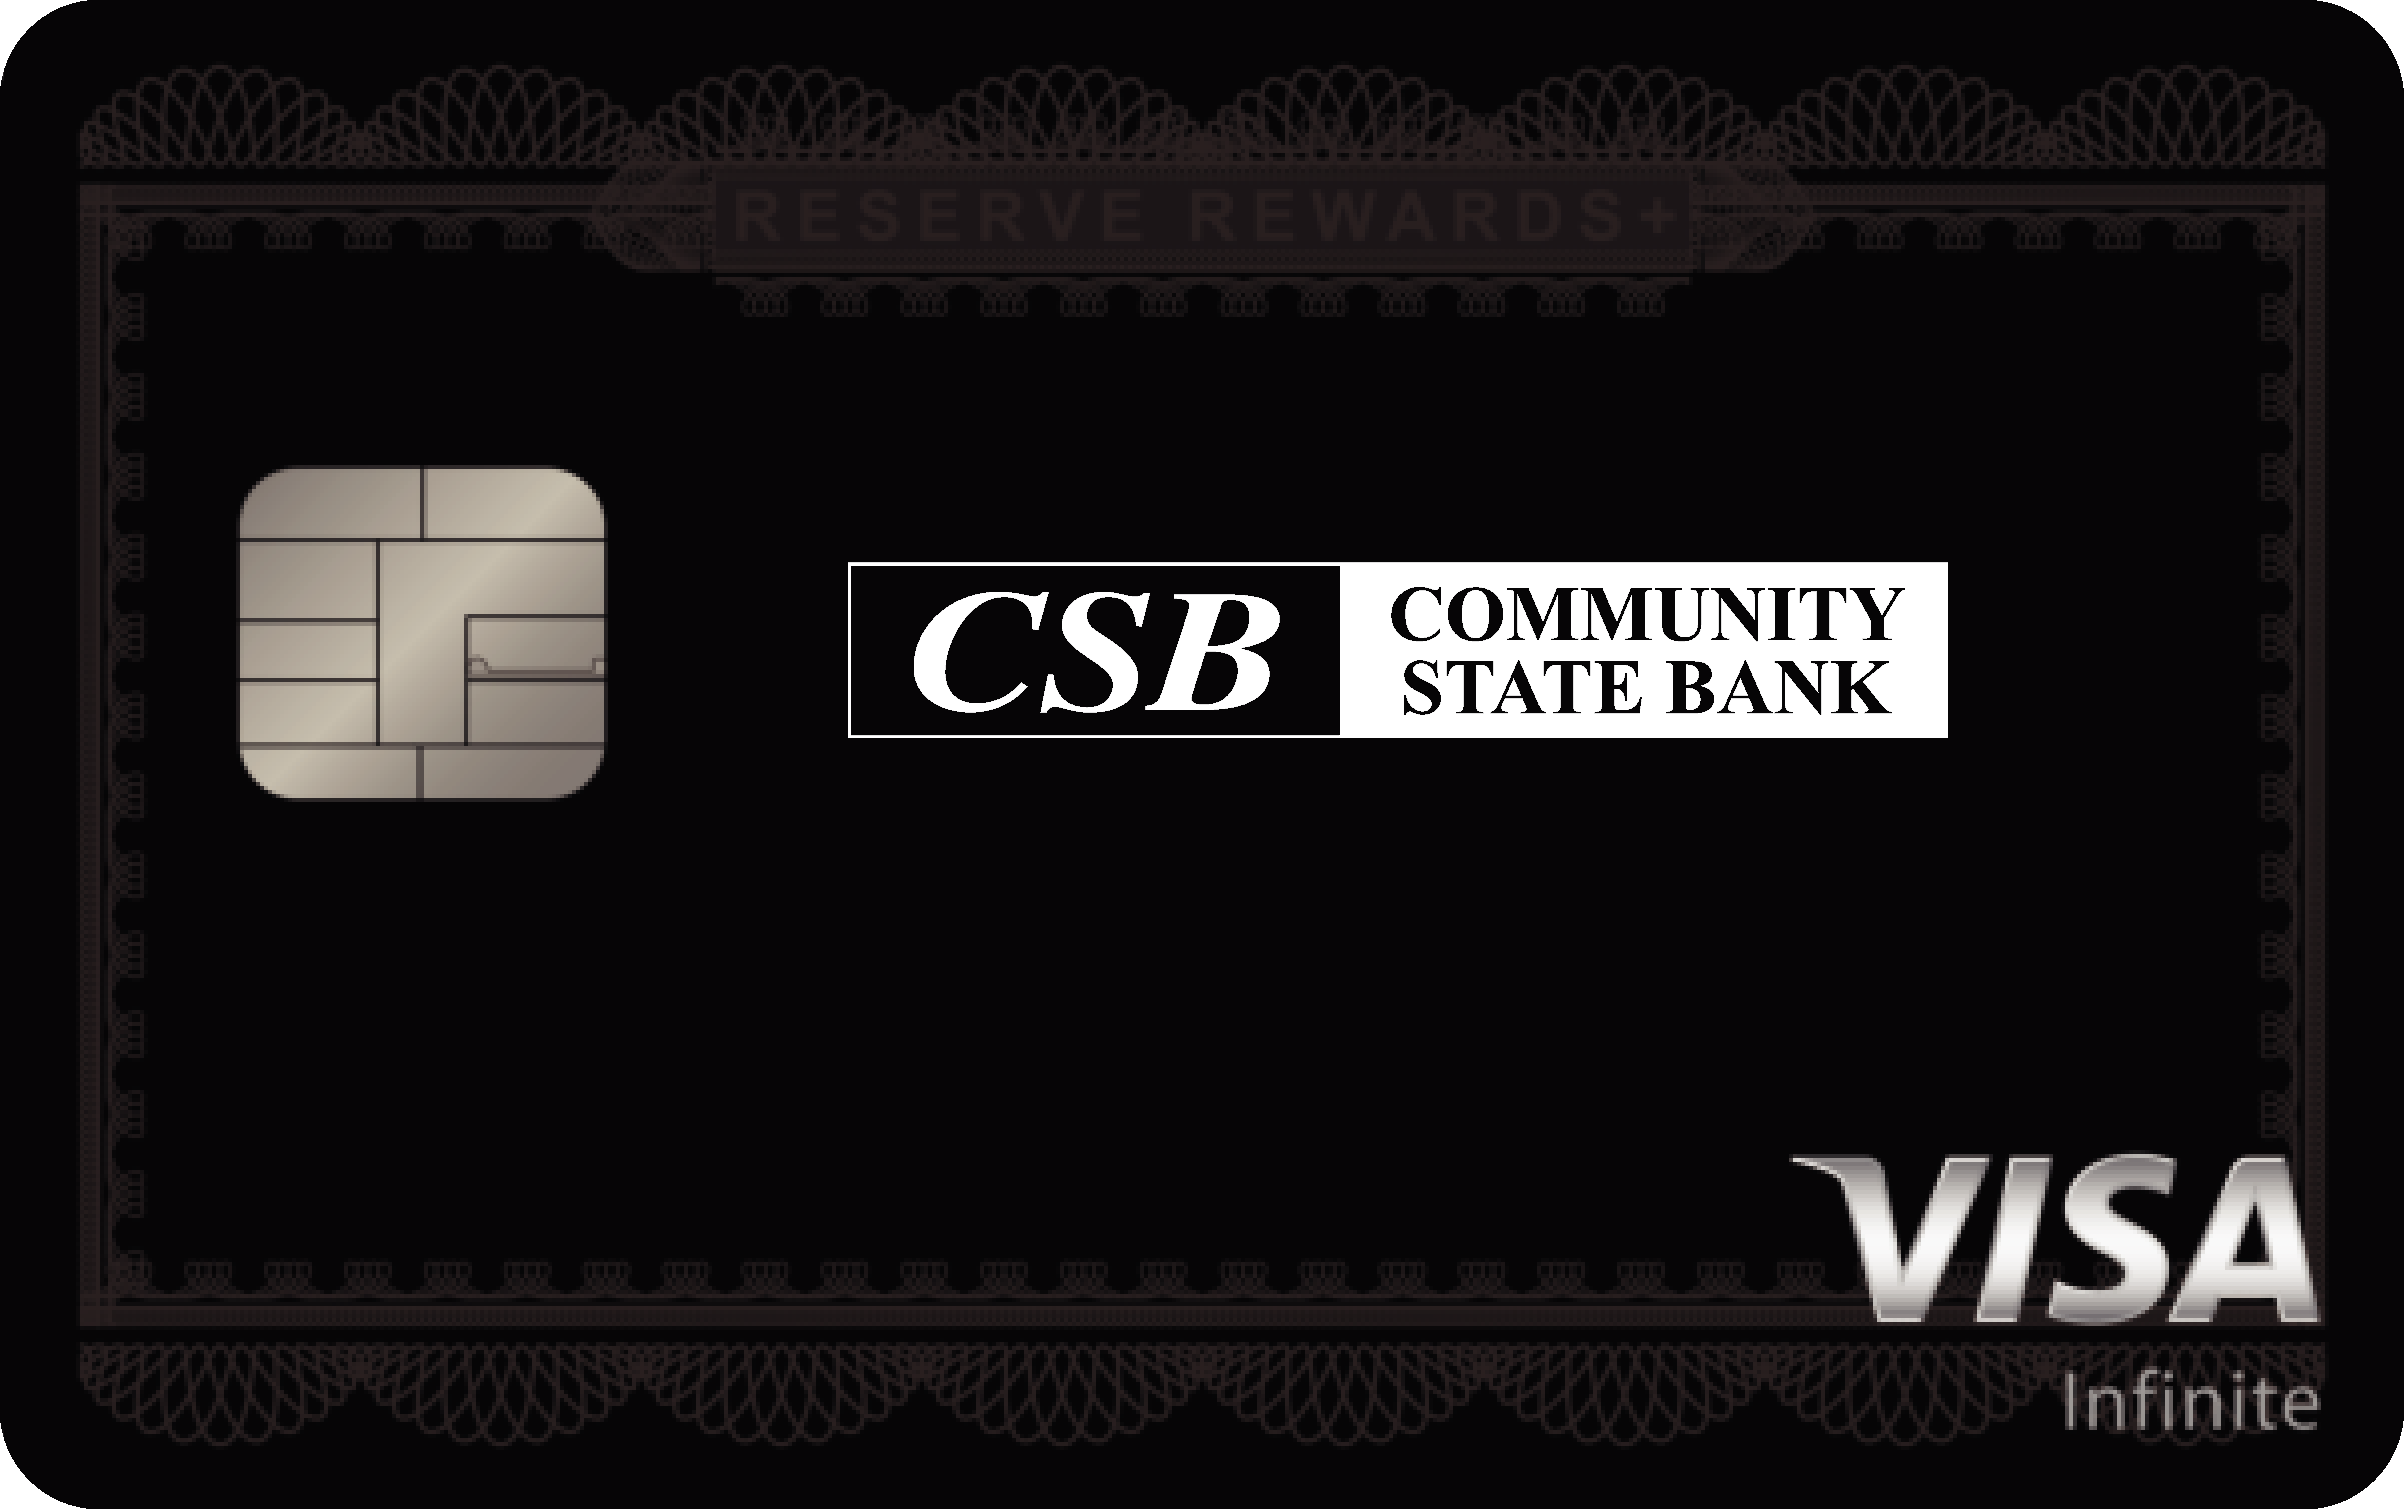 Community State Bank